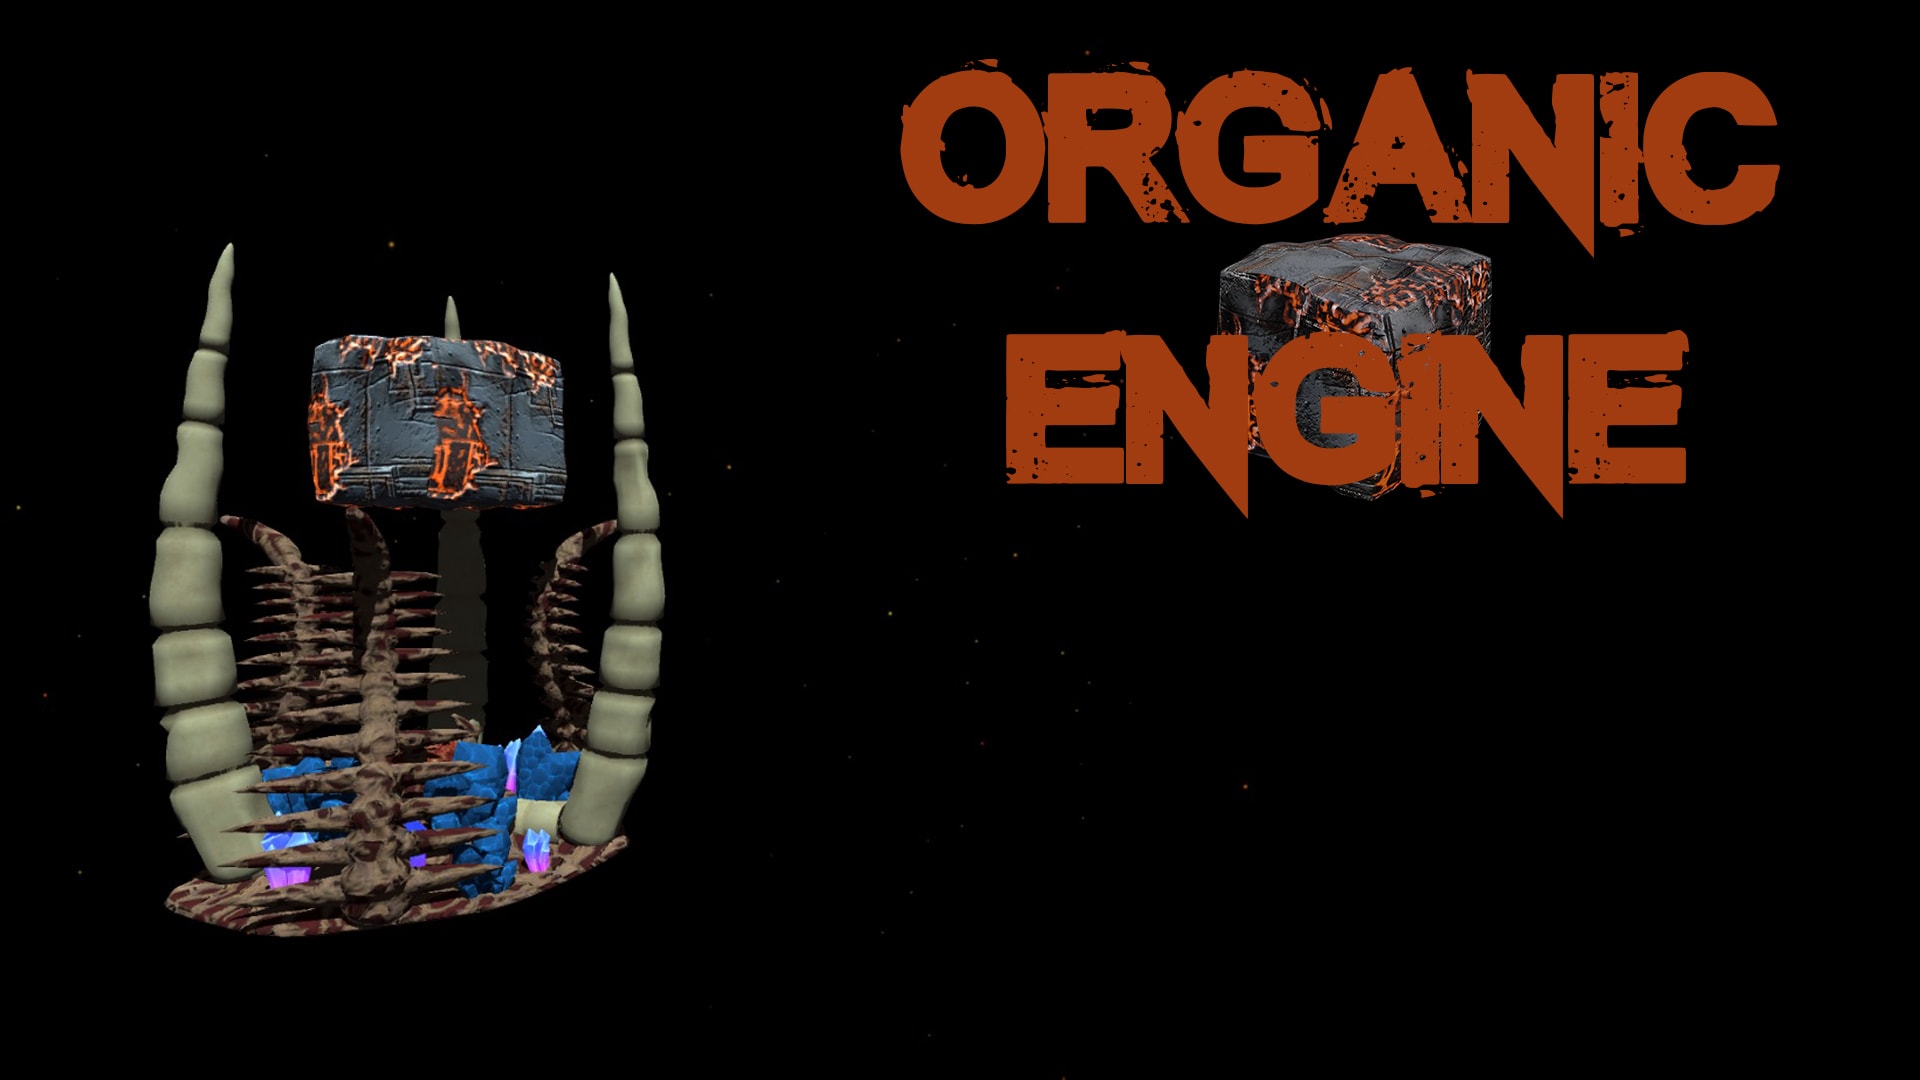 Organic Engine